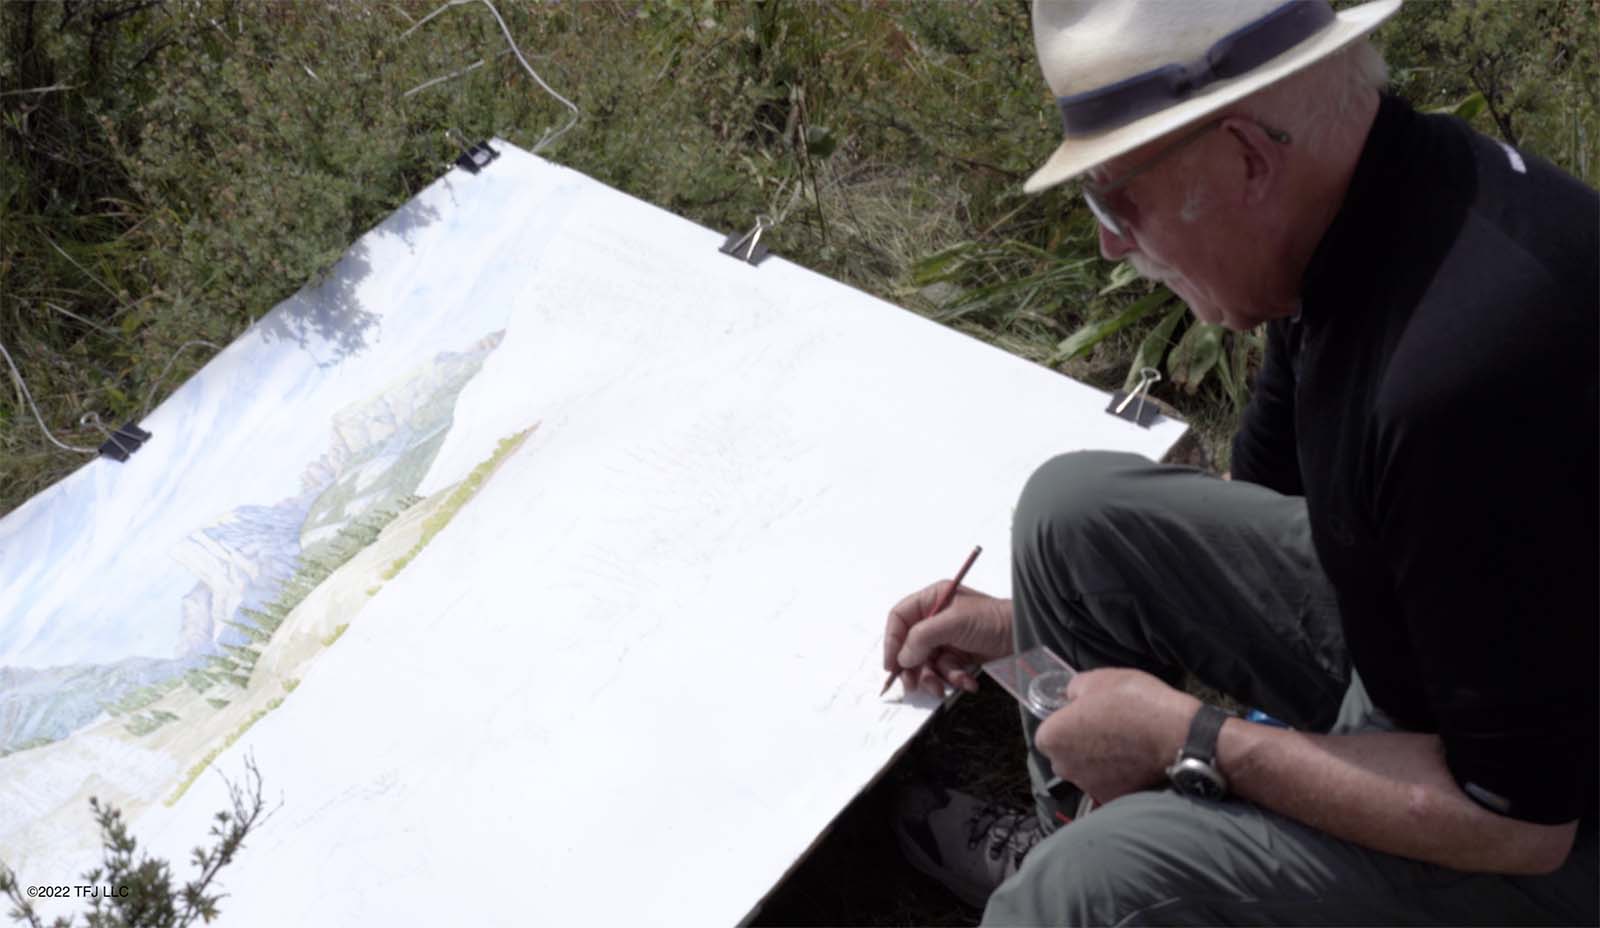 Tony Foster sketching Squaretop Mountain, September 2022. Photo copyright2022 TFJ LLC.